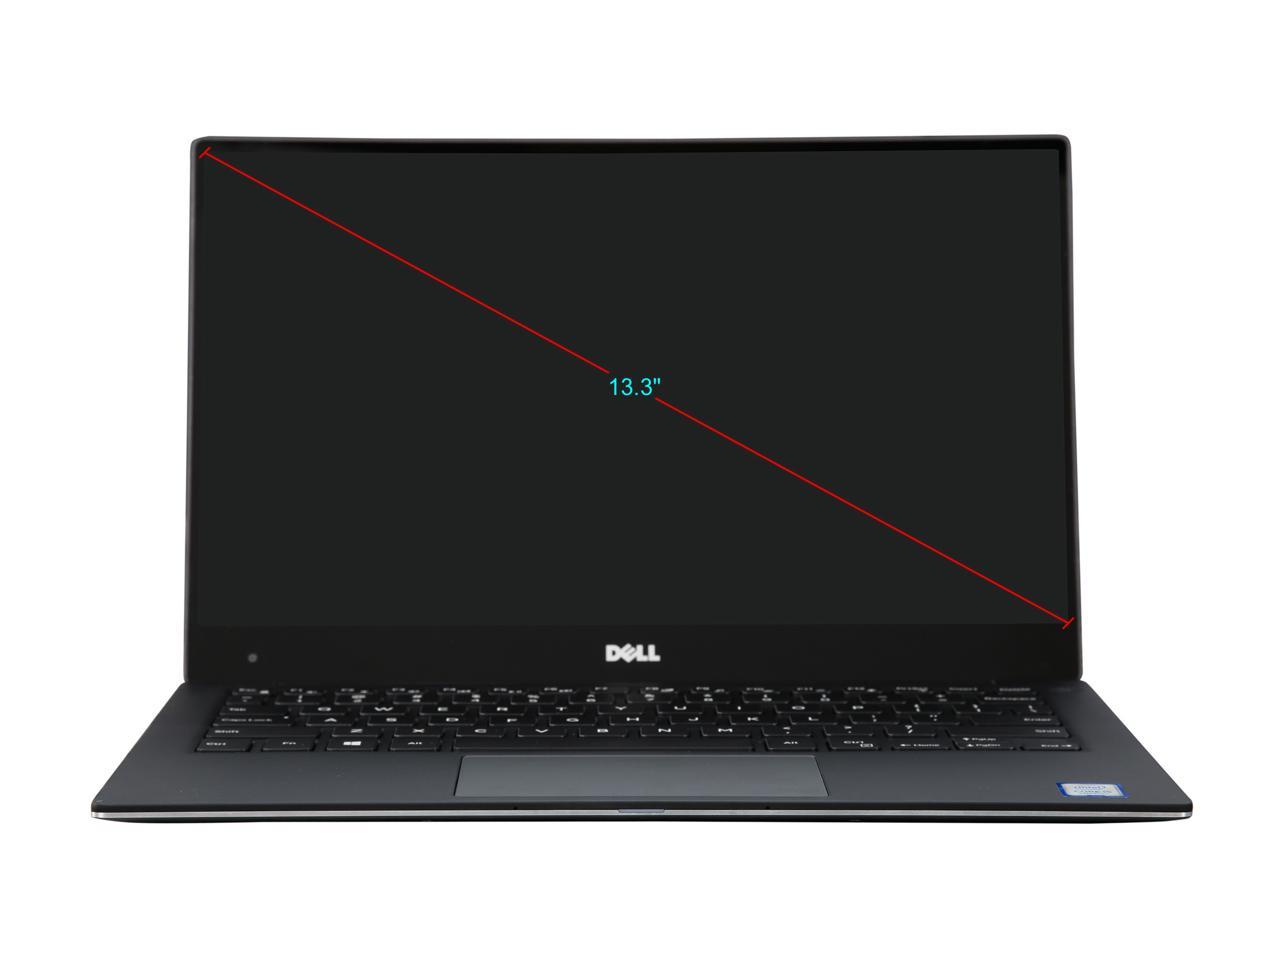 DELL Laptop XPS 13 (9360) XPS9360-1718SLV Intel Core i5 7th Gen 7200U